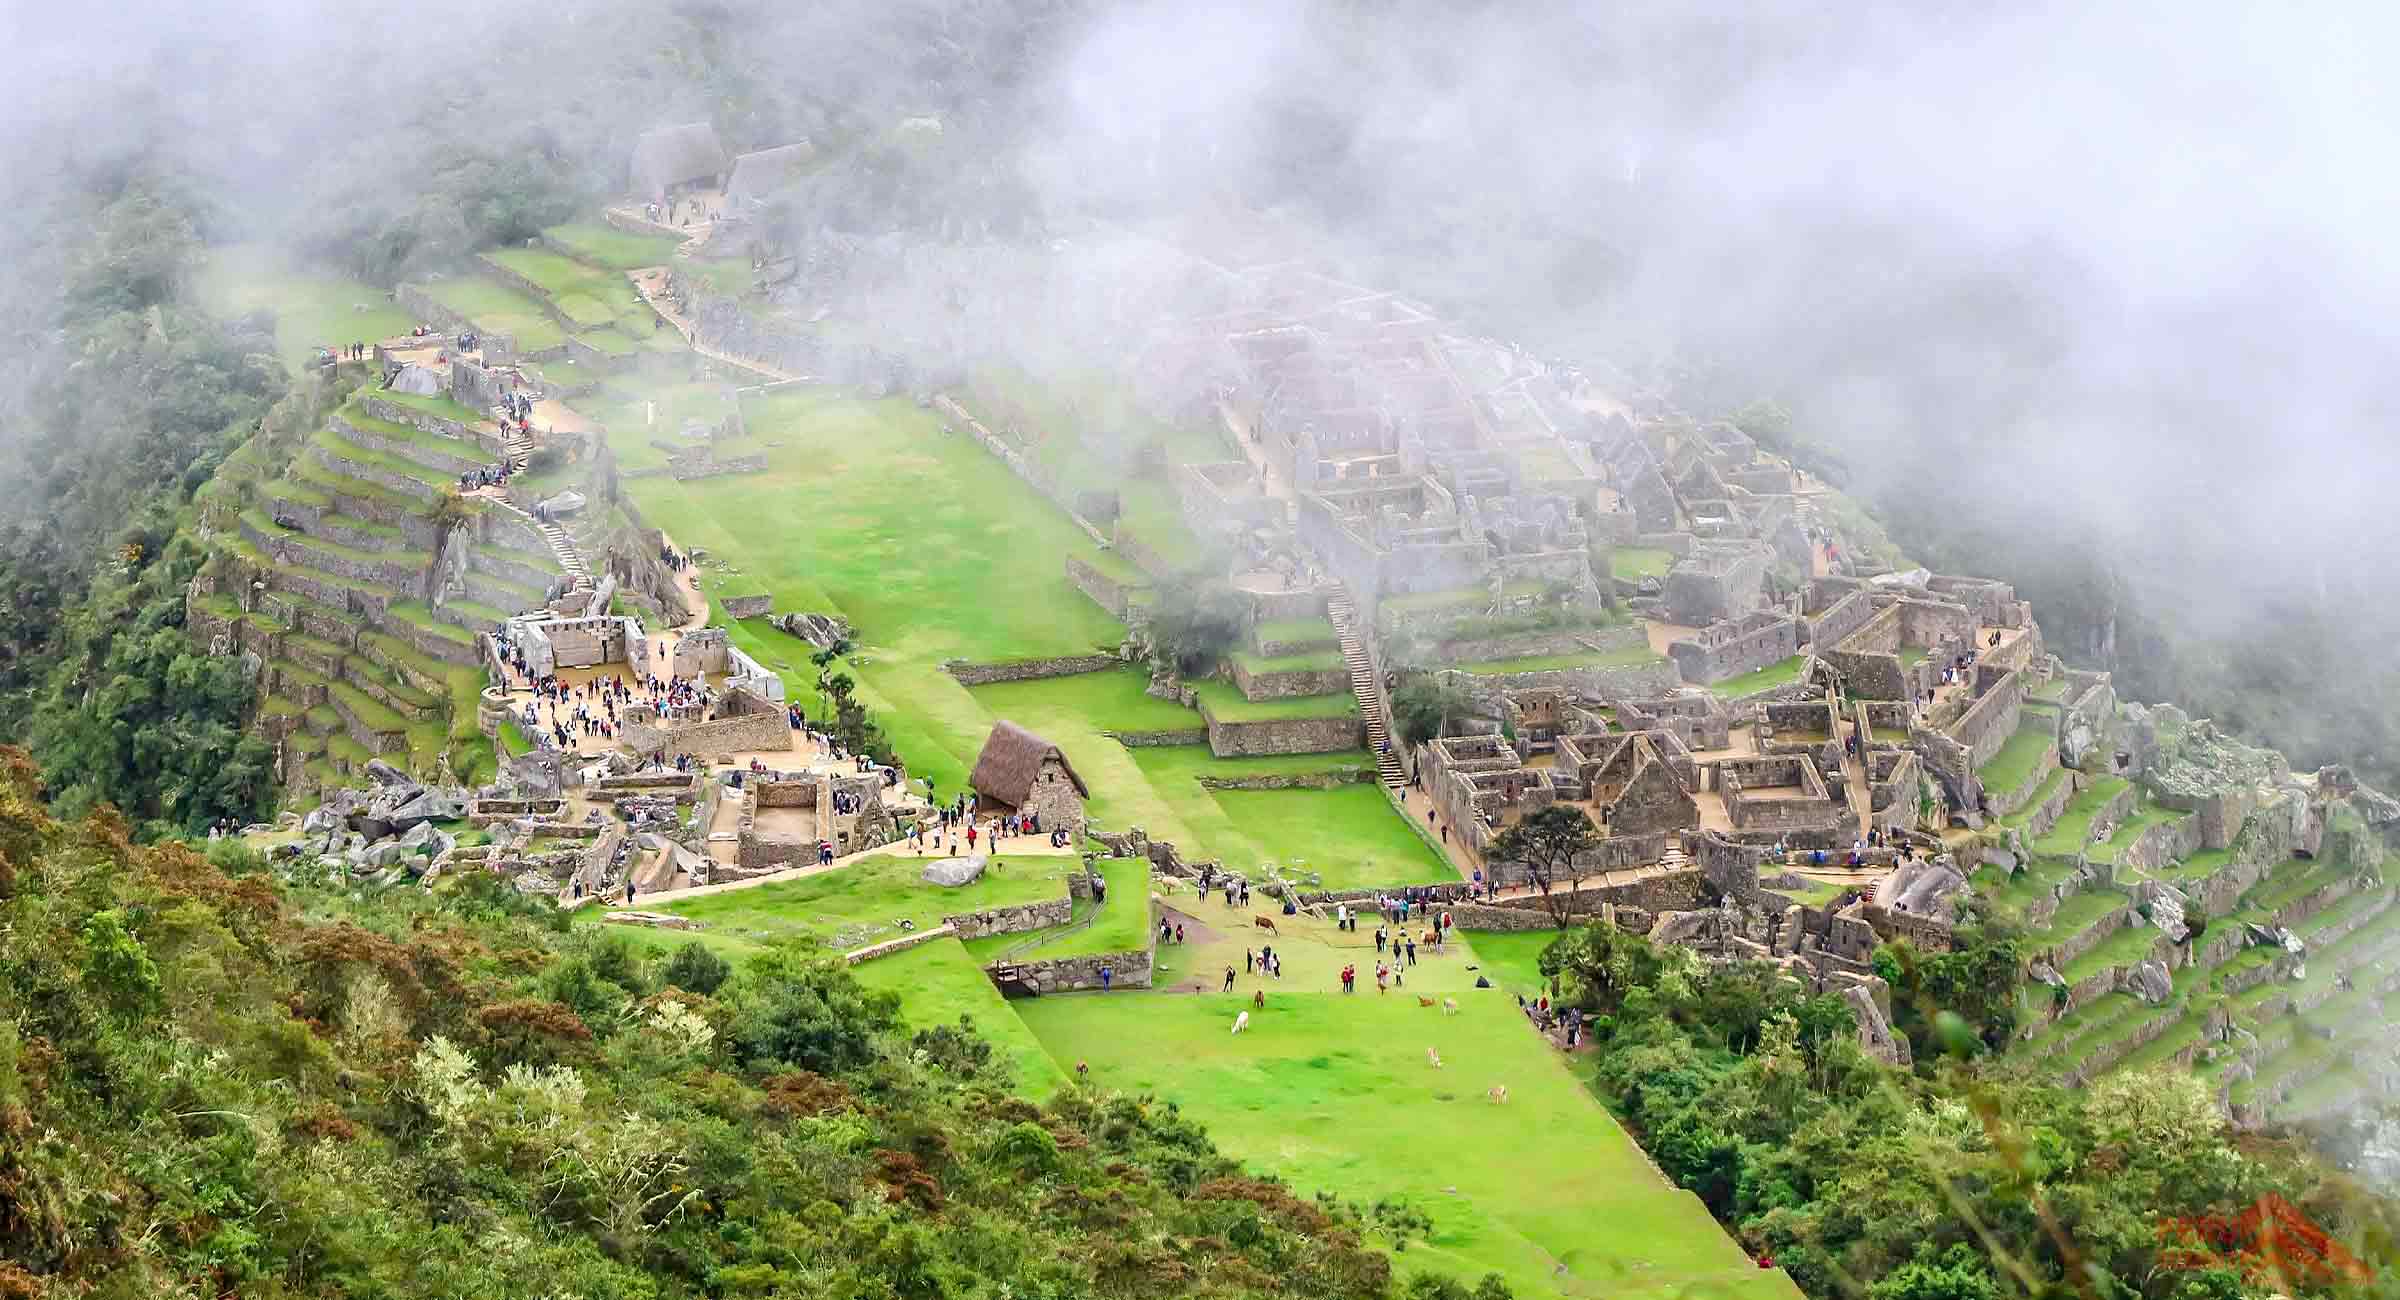 Best Time to visit Machu Picchu